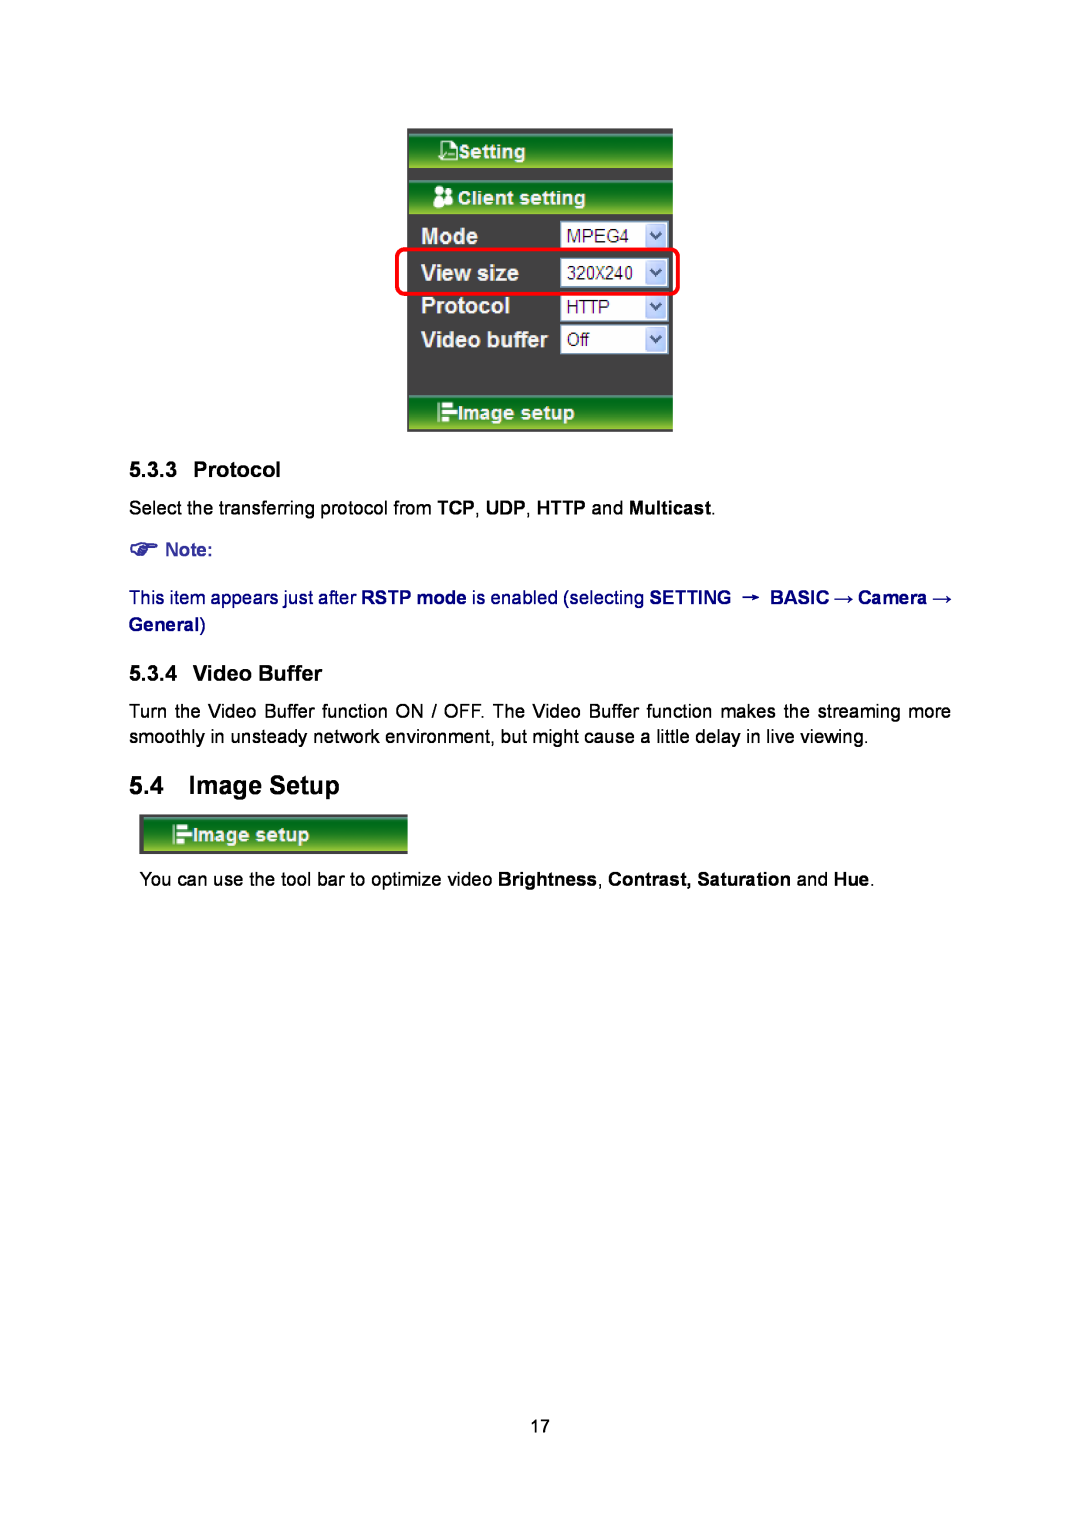 TP-Link TL-SC3130G manual Image Setup, Protocol, Video Buffer 